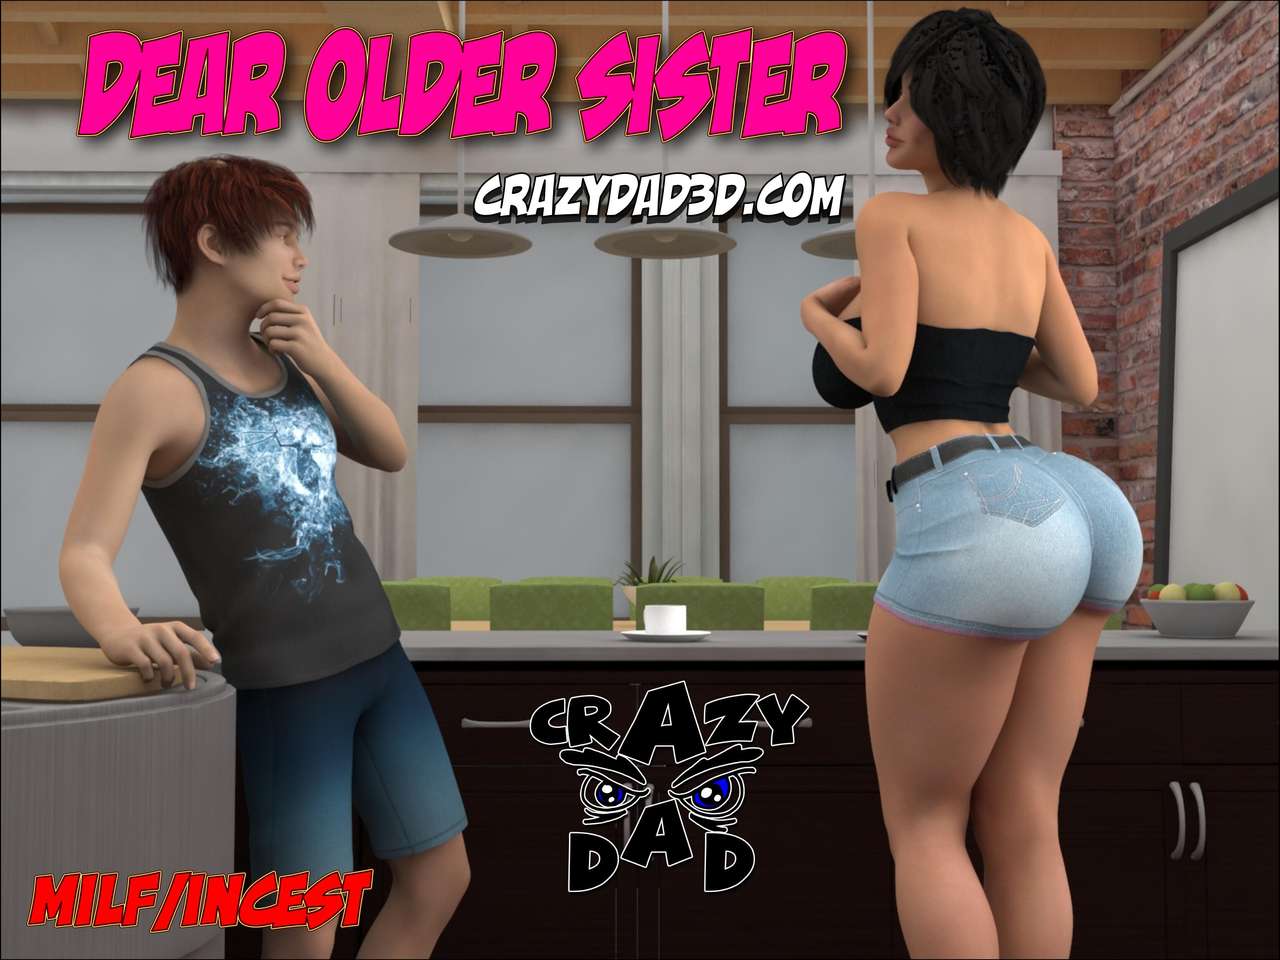 3d Big Sister - Dear Older Sister [CrazyDad3D] Porn Comic - AllPornComic